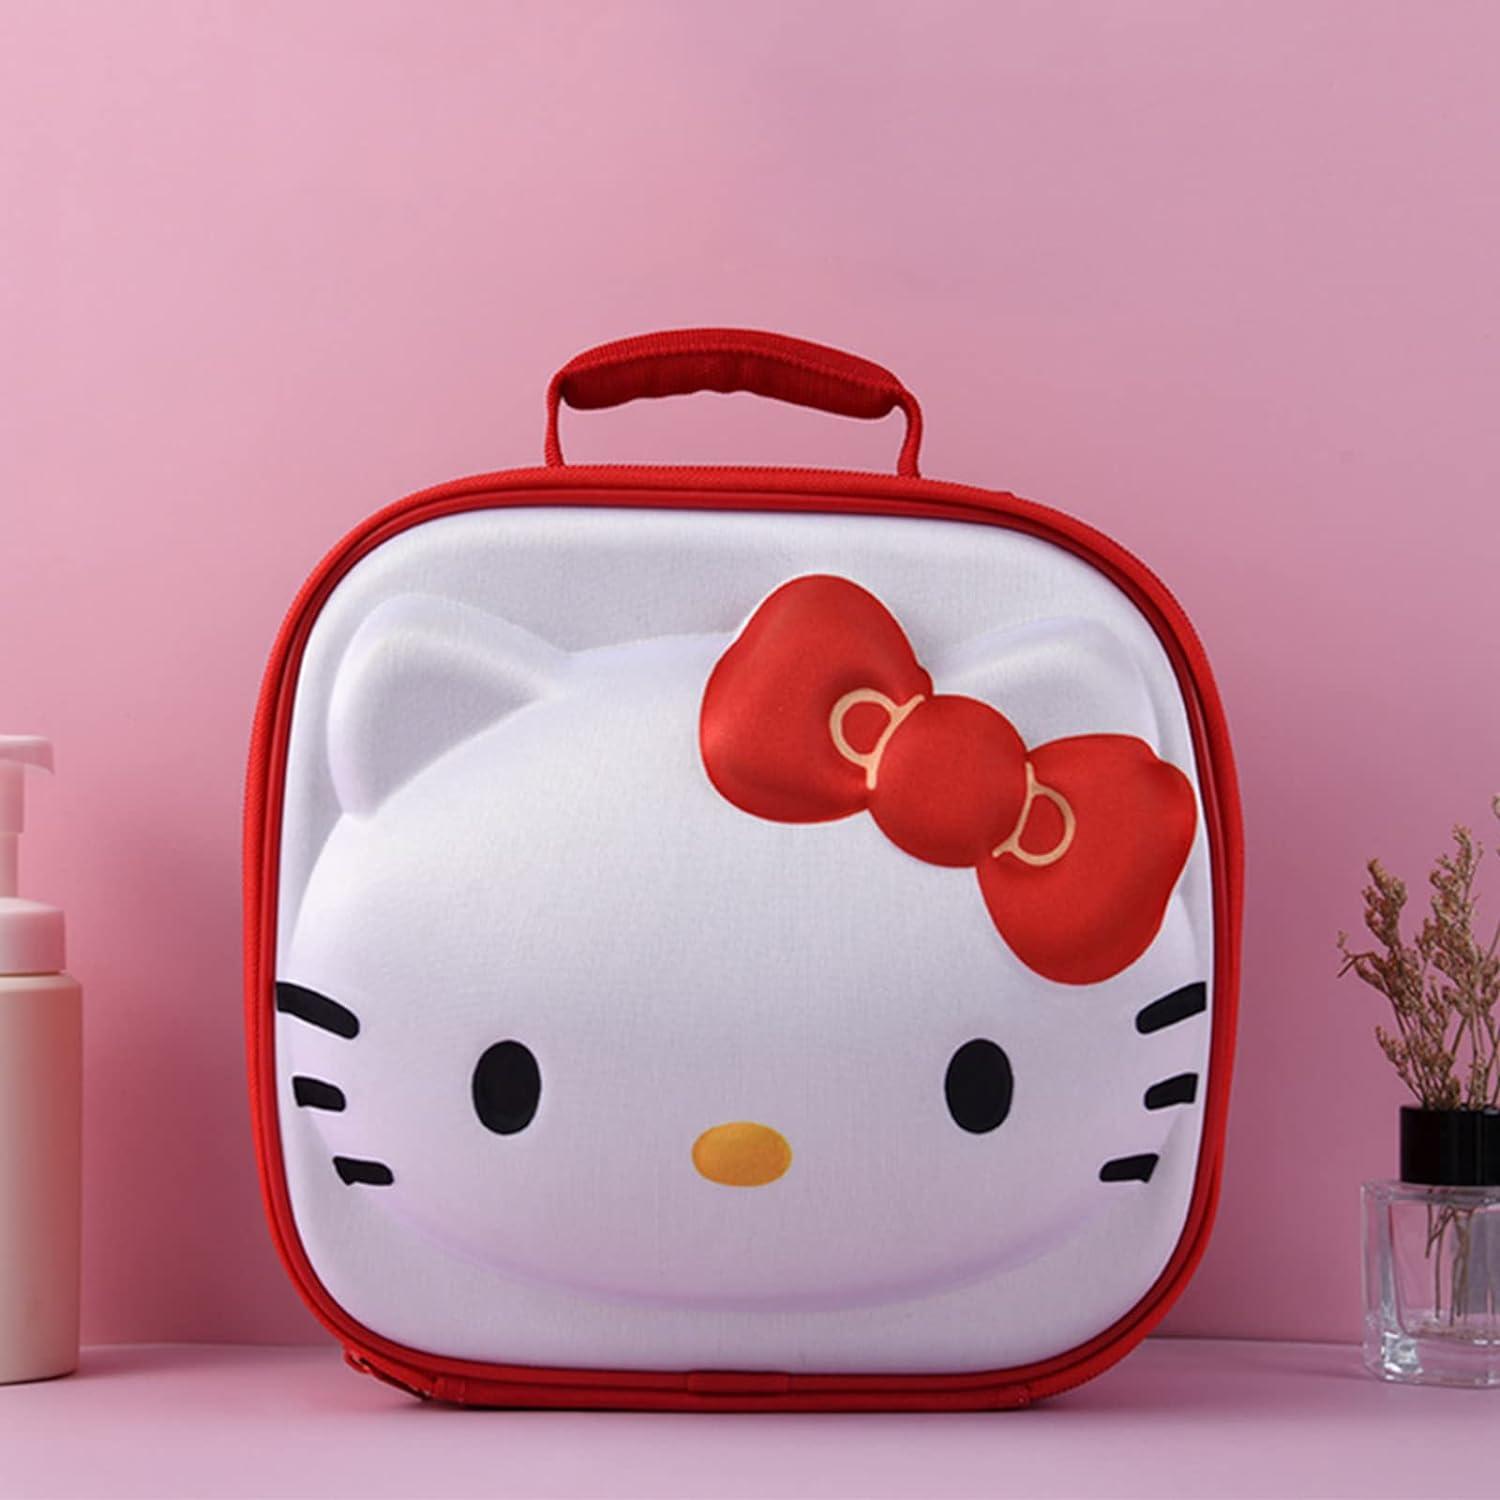 Hello Kitty Makeup Time Bento Box